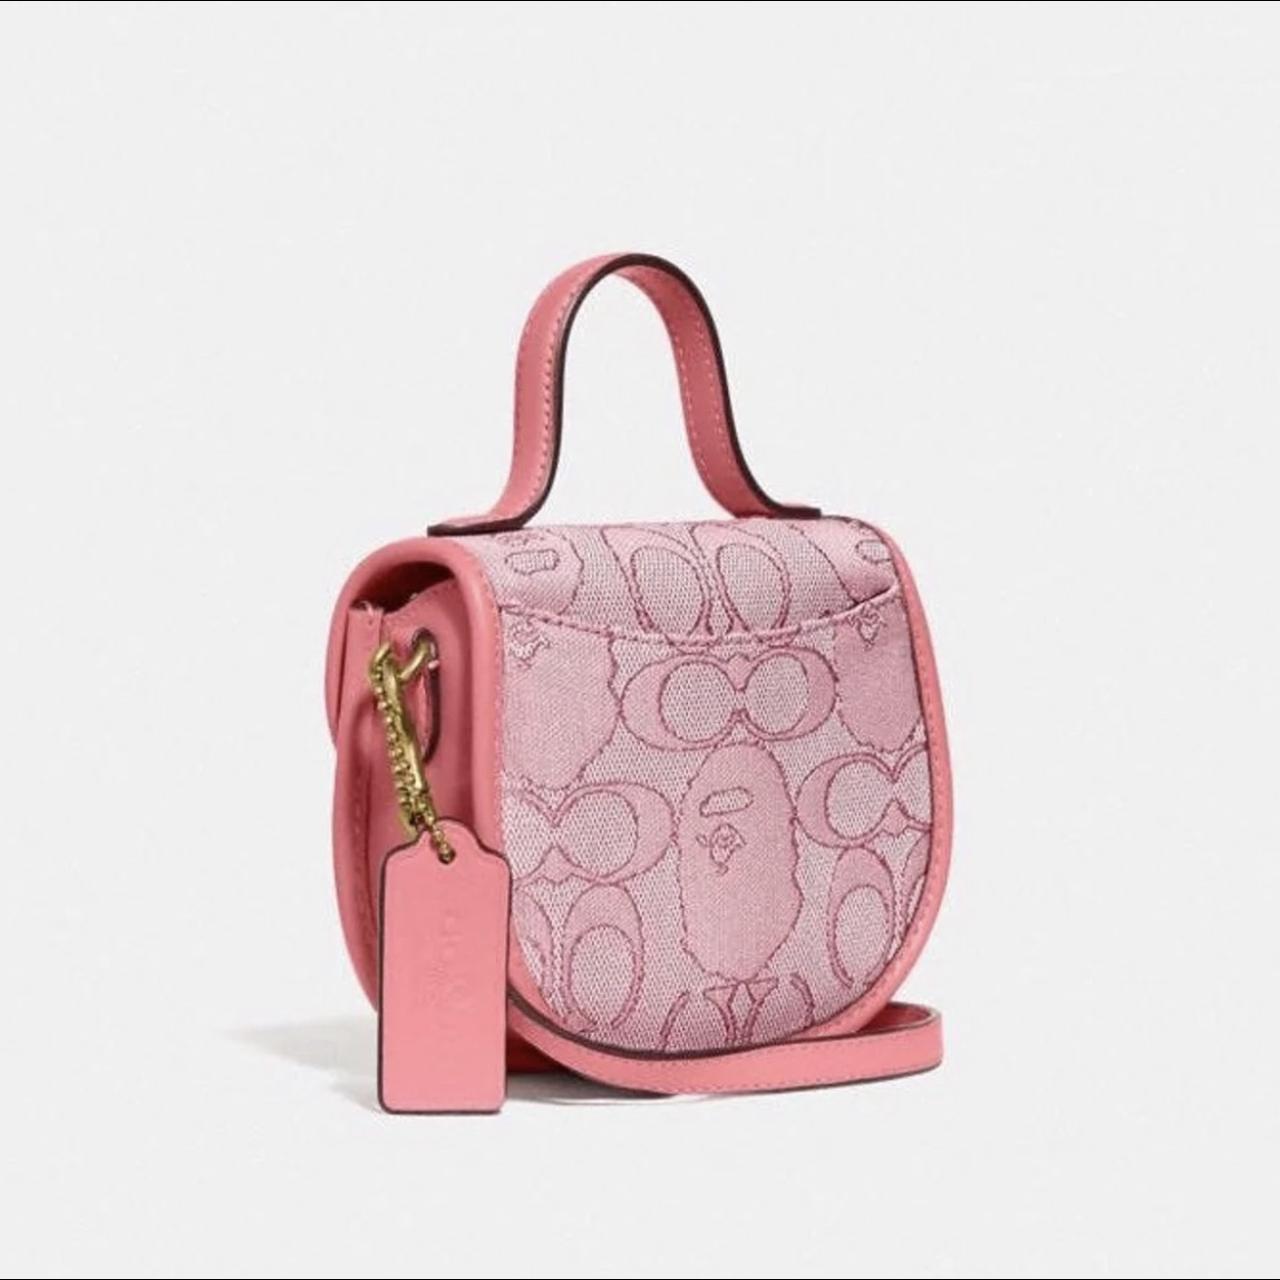 Bape x coach mini top handle saddle bag in pink... - Depop